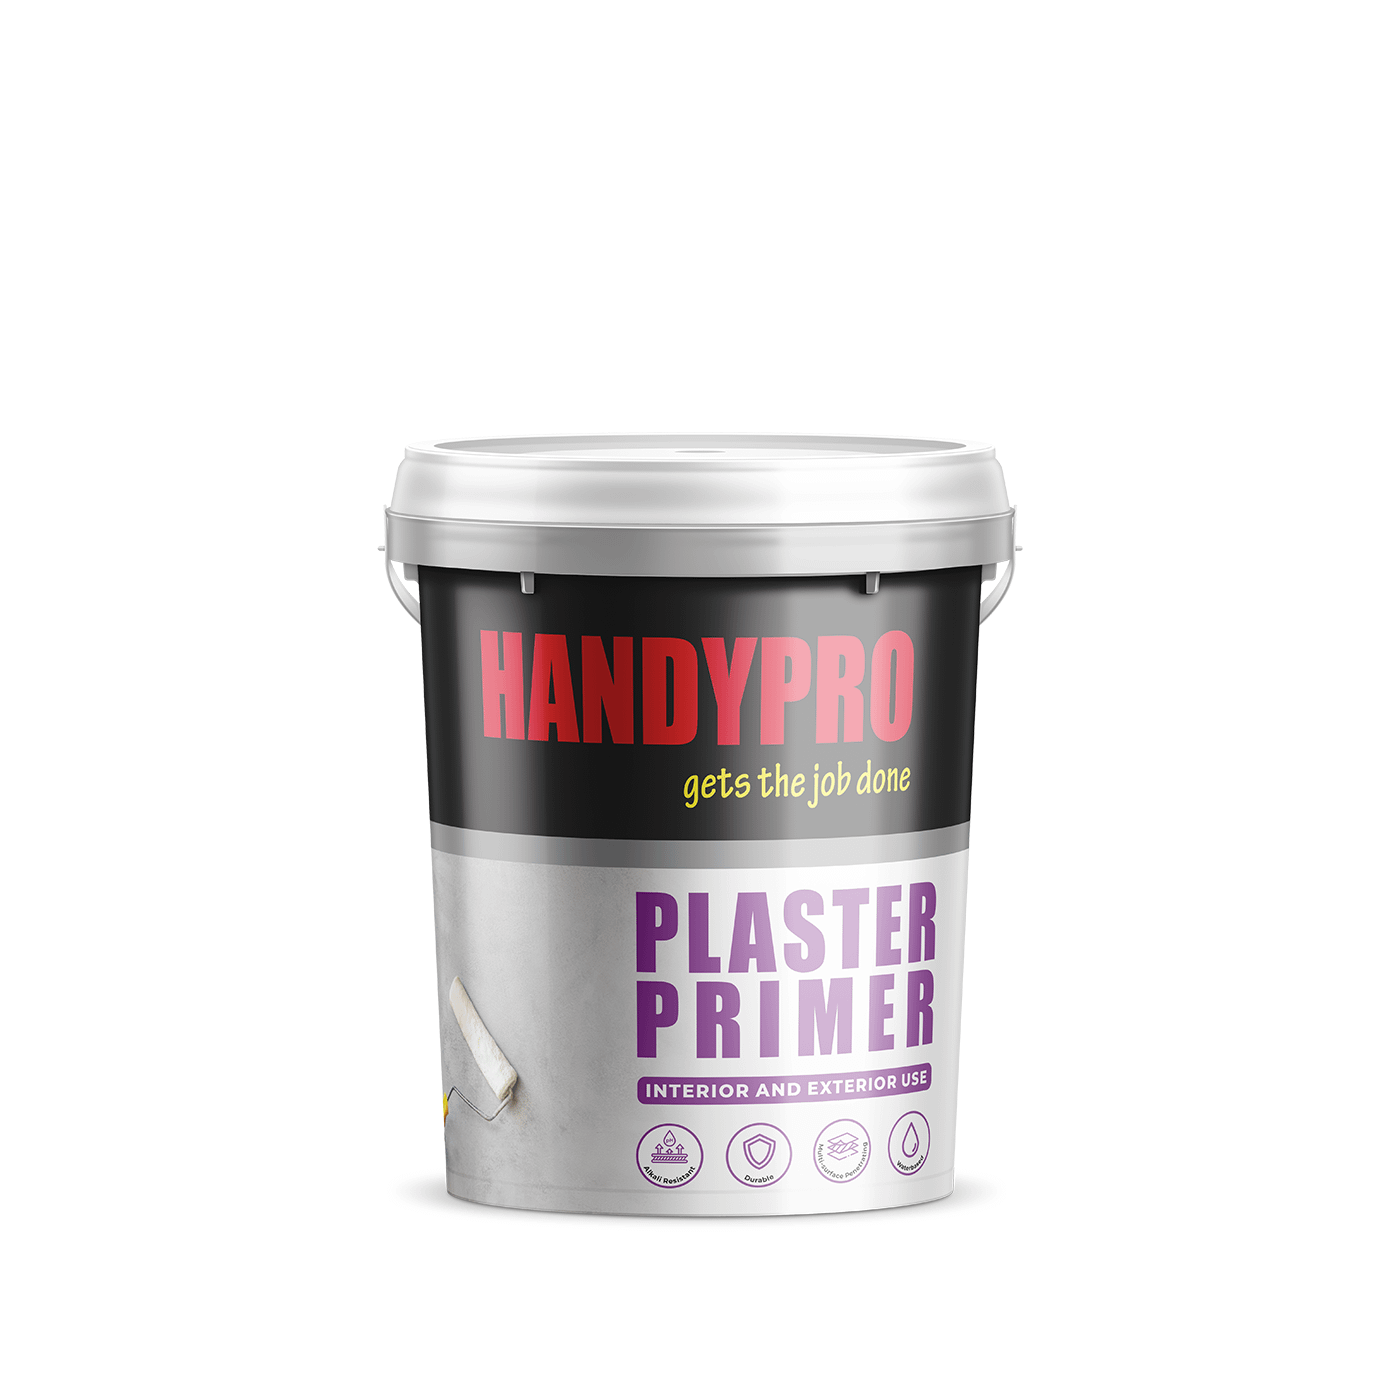 handy-pro-plaster-primer-image